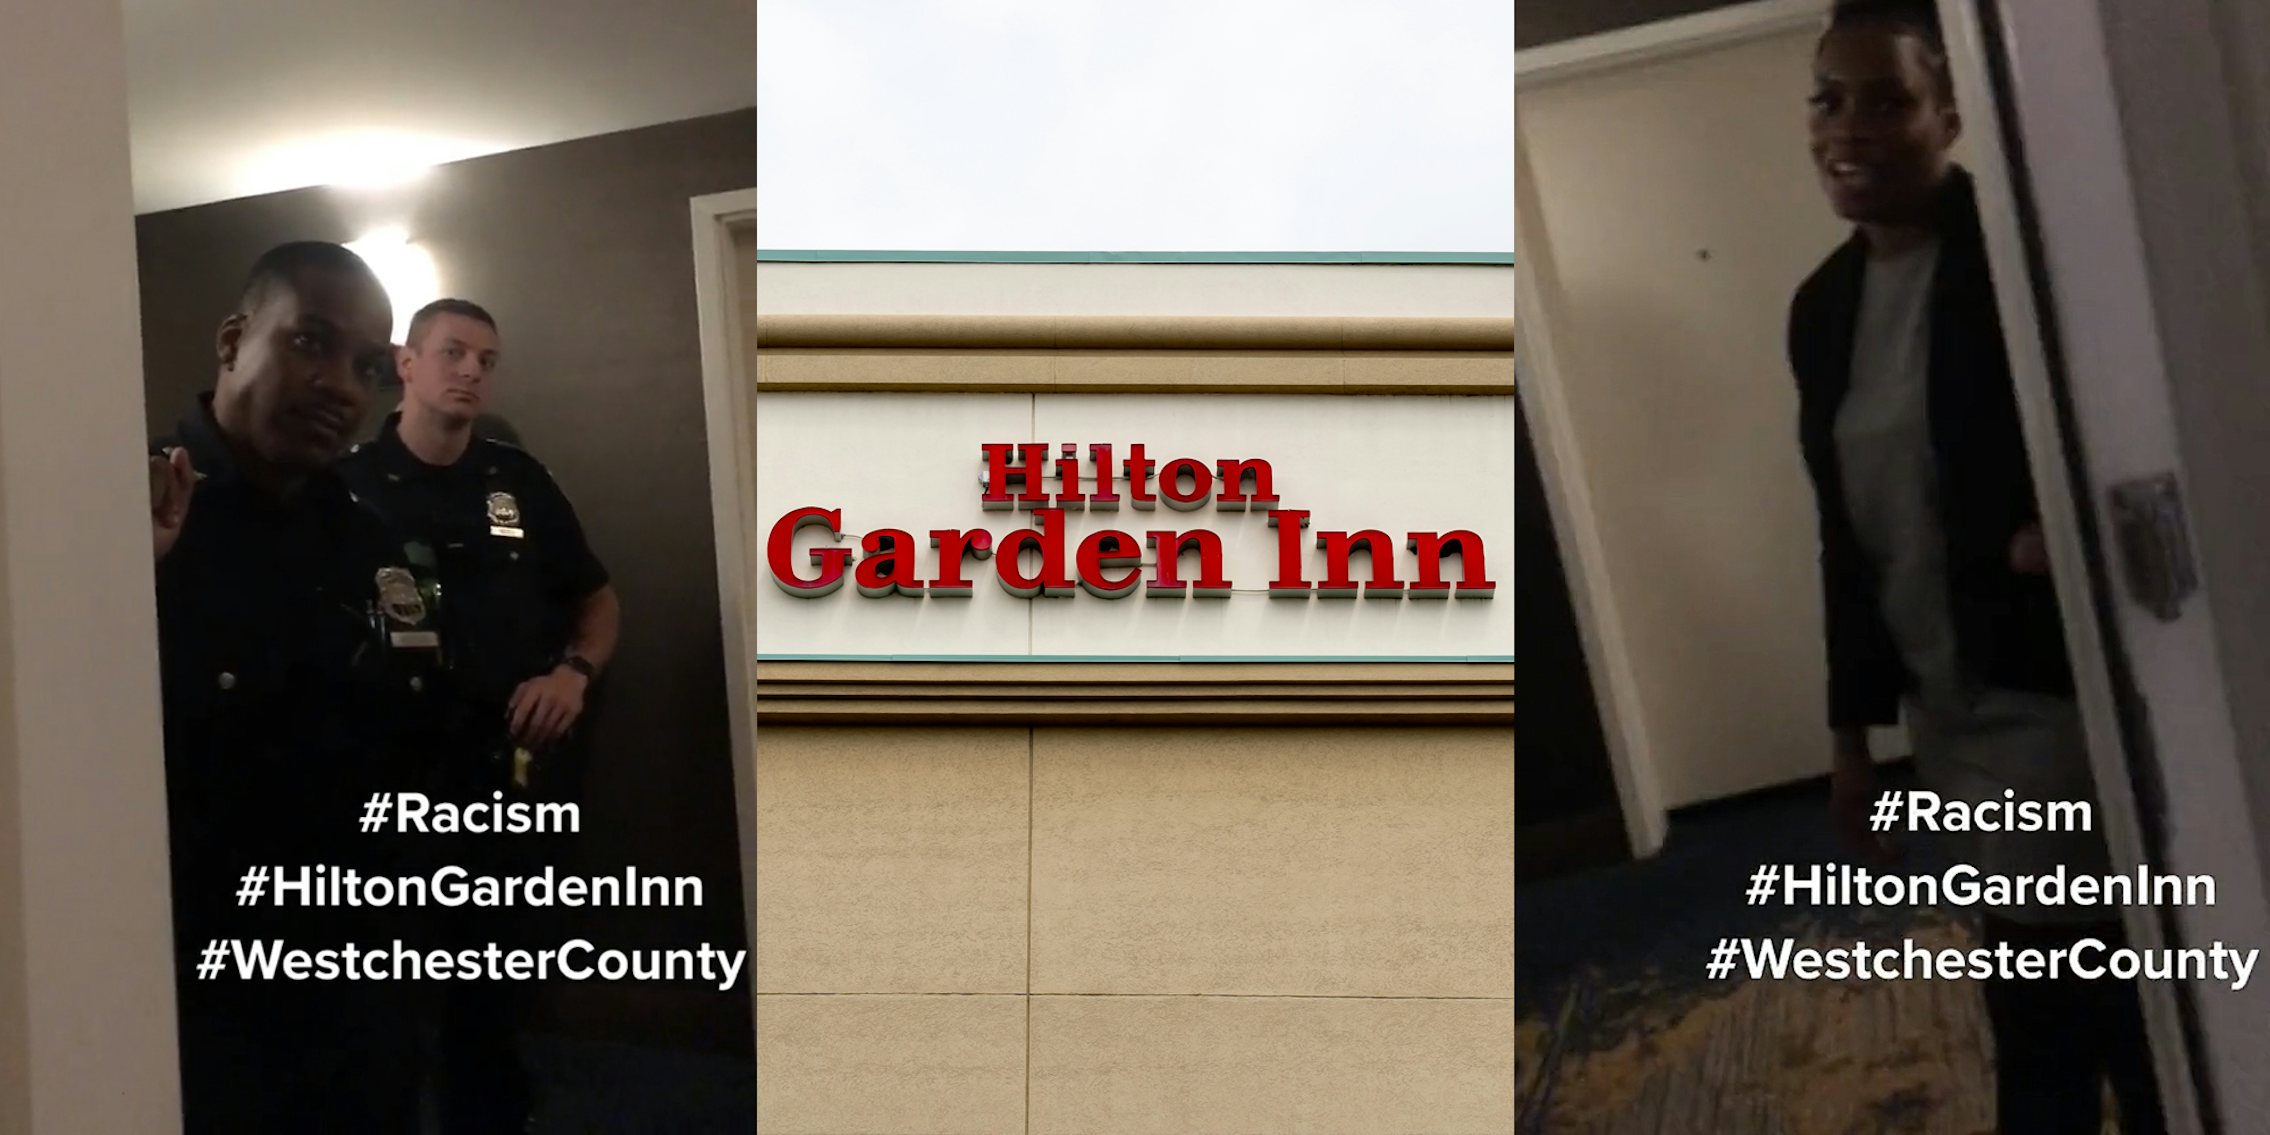 police with hand on open doorway at Hilton Garden Inn hotel room with caption '#Racism #HiltonGardenInn #WestchesterCounty' (l) Hilton Garden Inn sign on building (c) woman with hand on open doorway at Hilton Garden Inn hotel room with caption '#Racism #HiltonGardenInn #WestchesterCounty' (r)